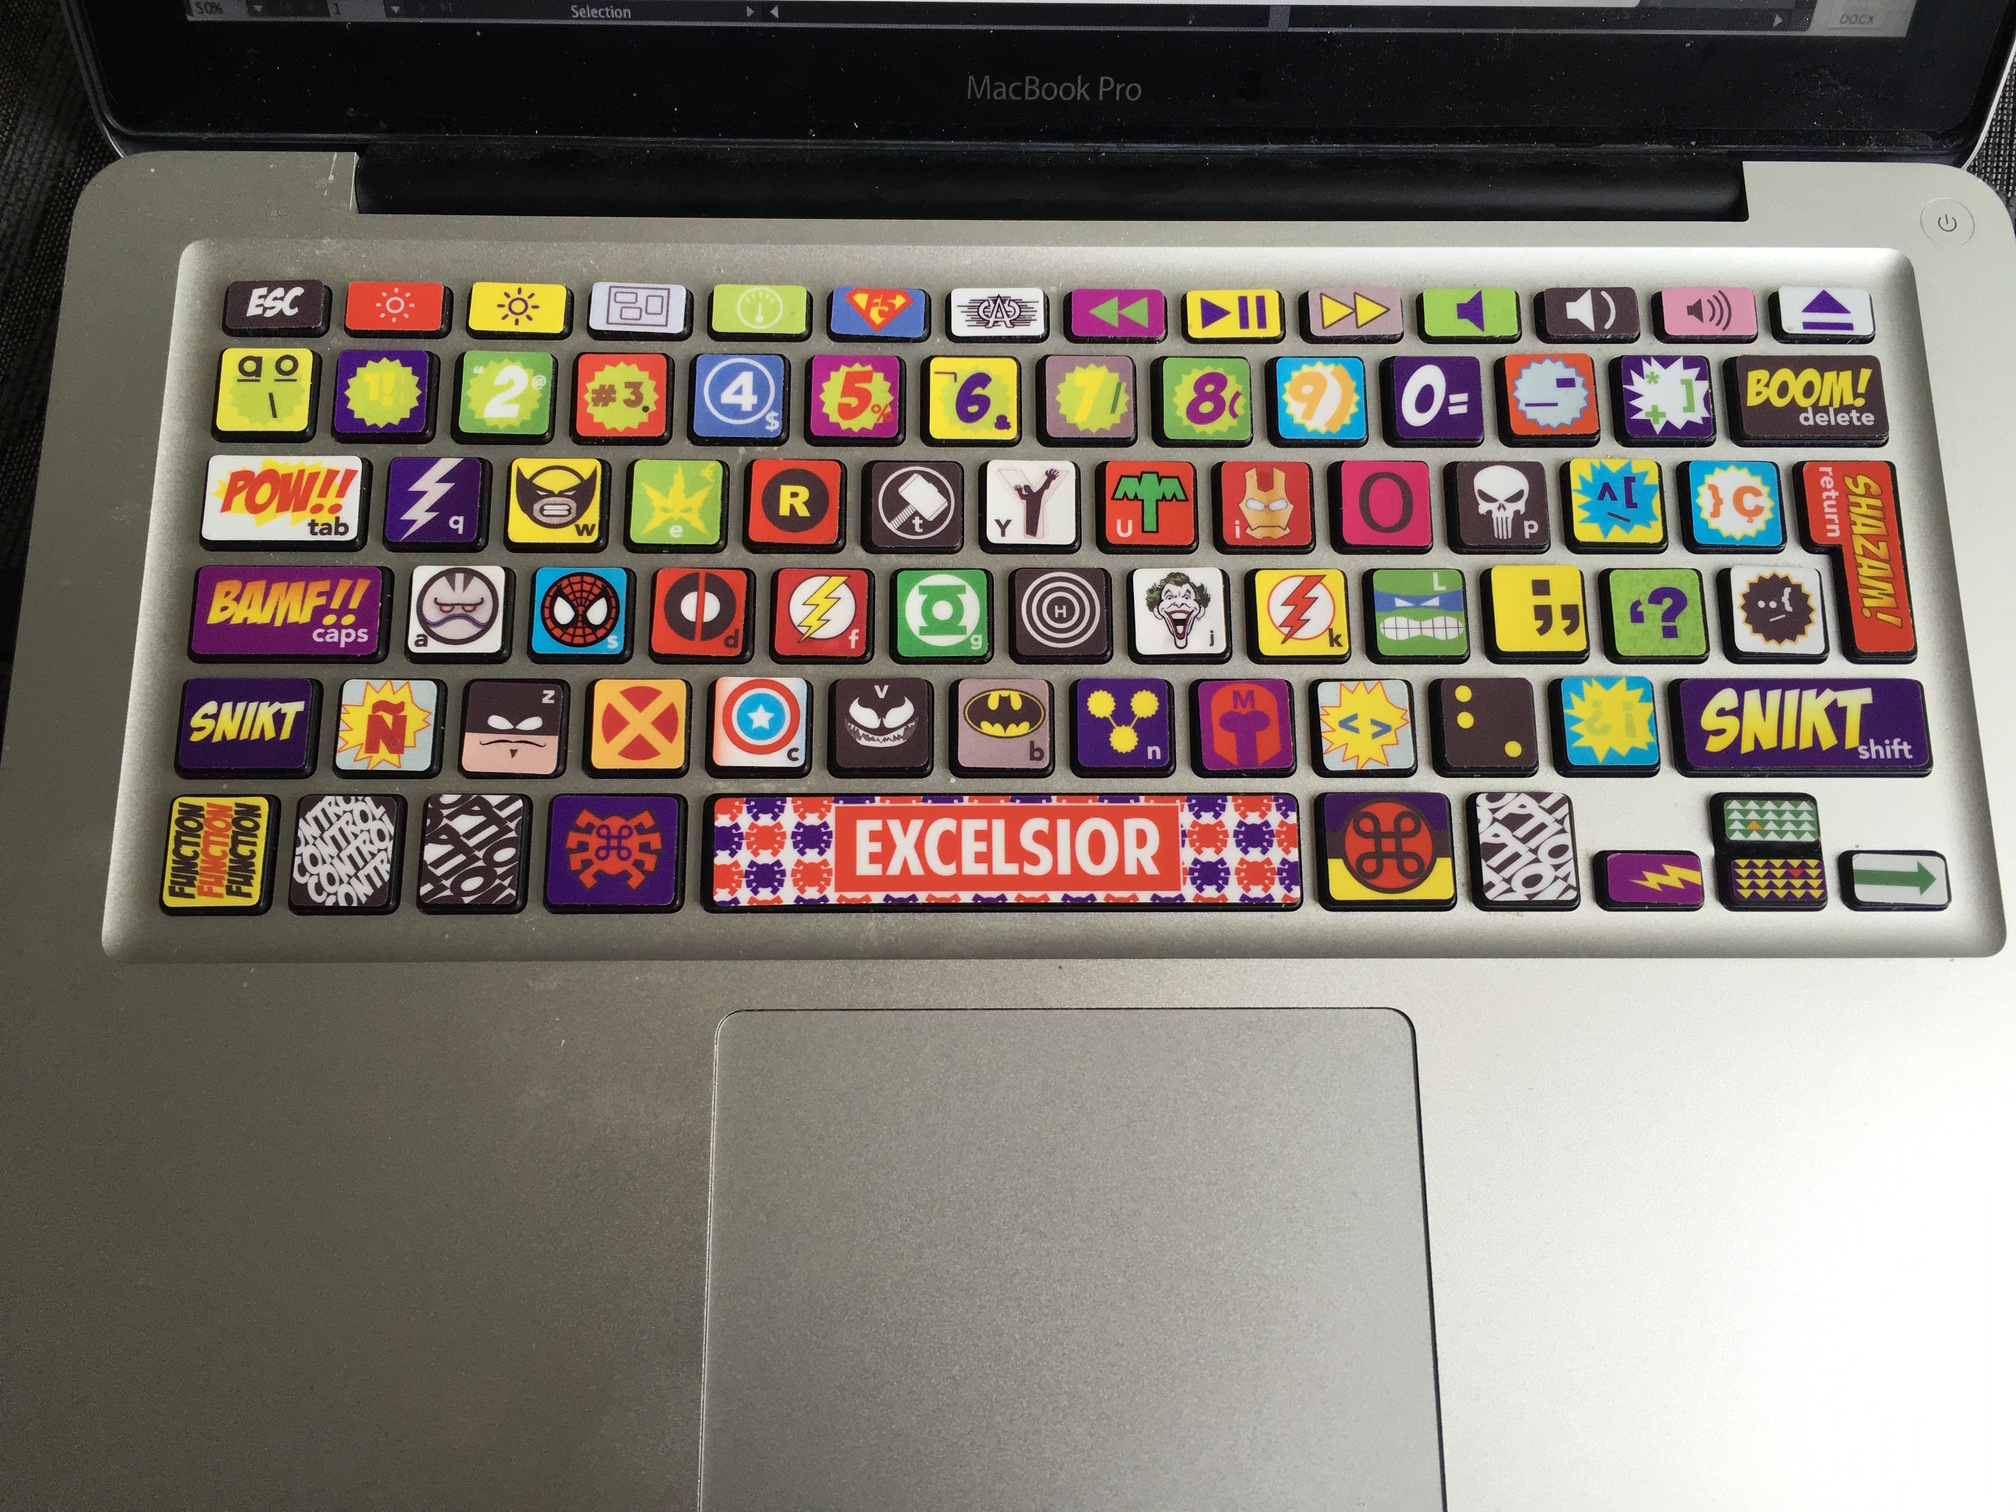 My actual keyboard!